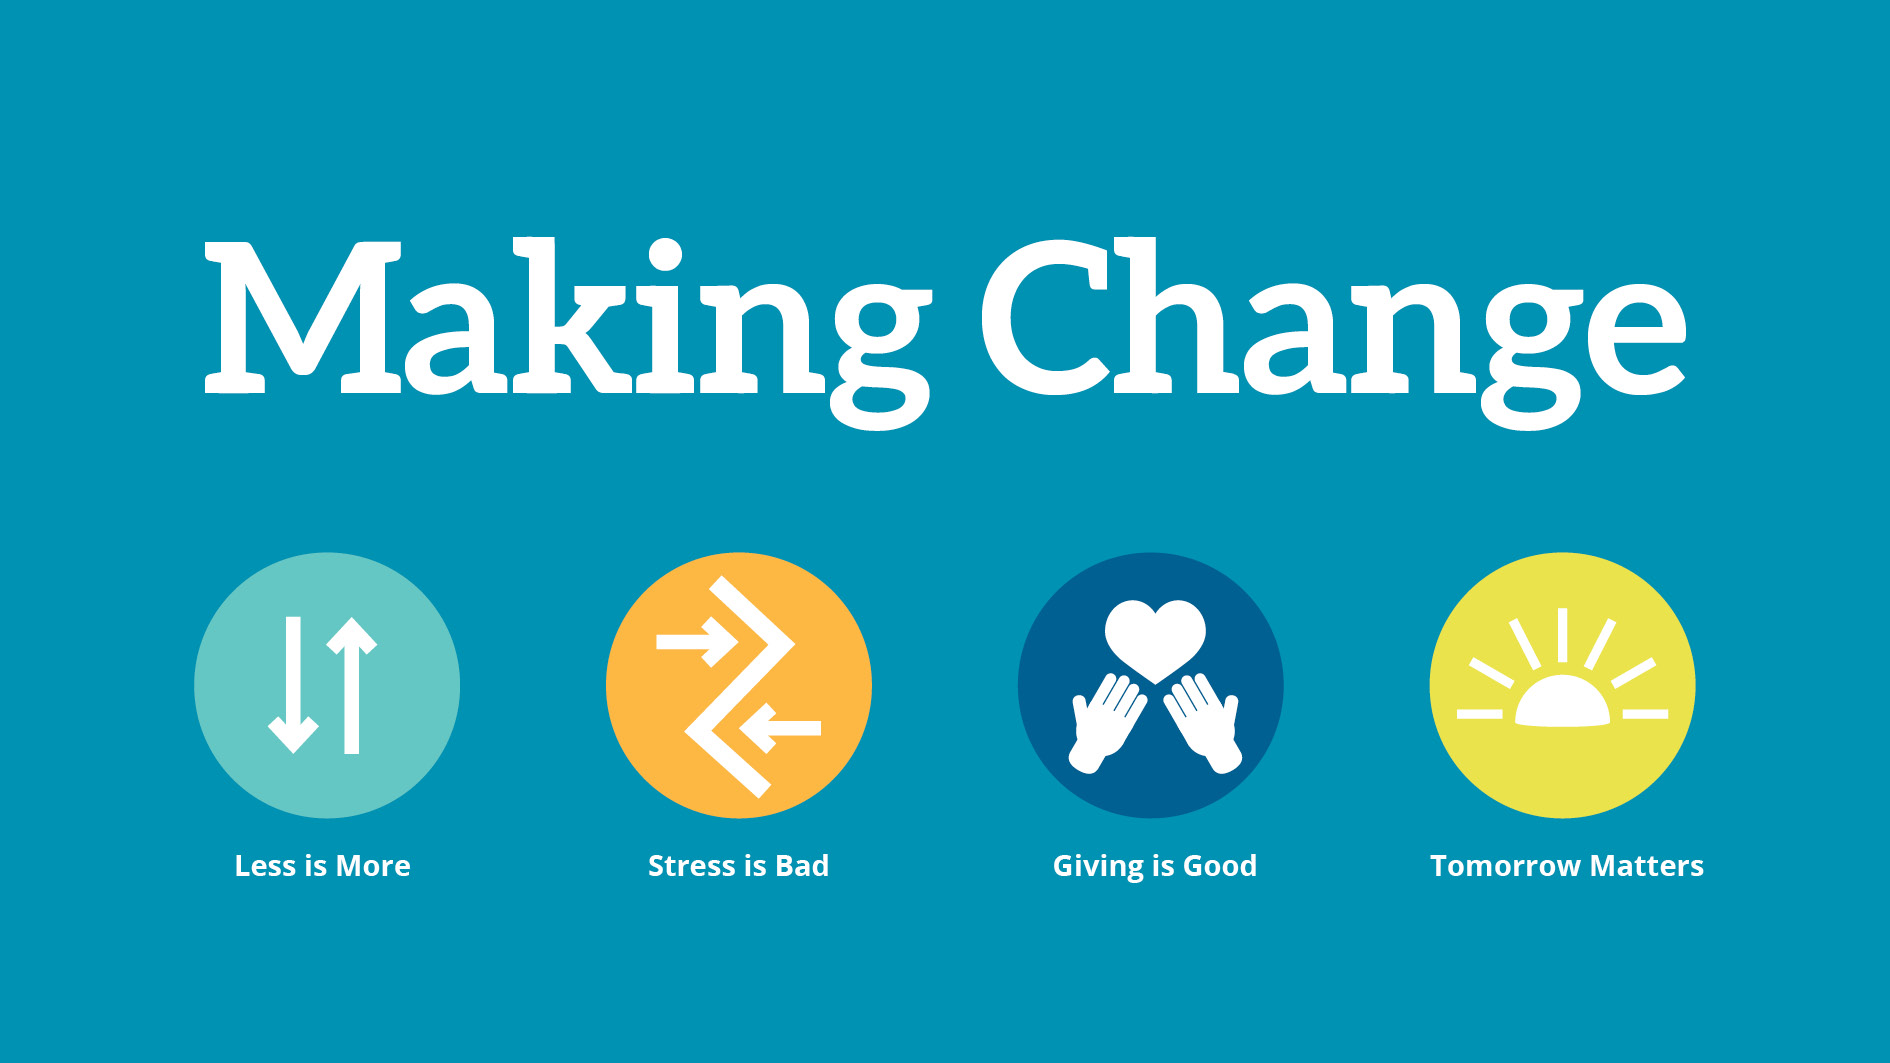 Making Change - Less is More - Craig Jourdain